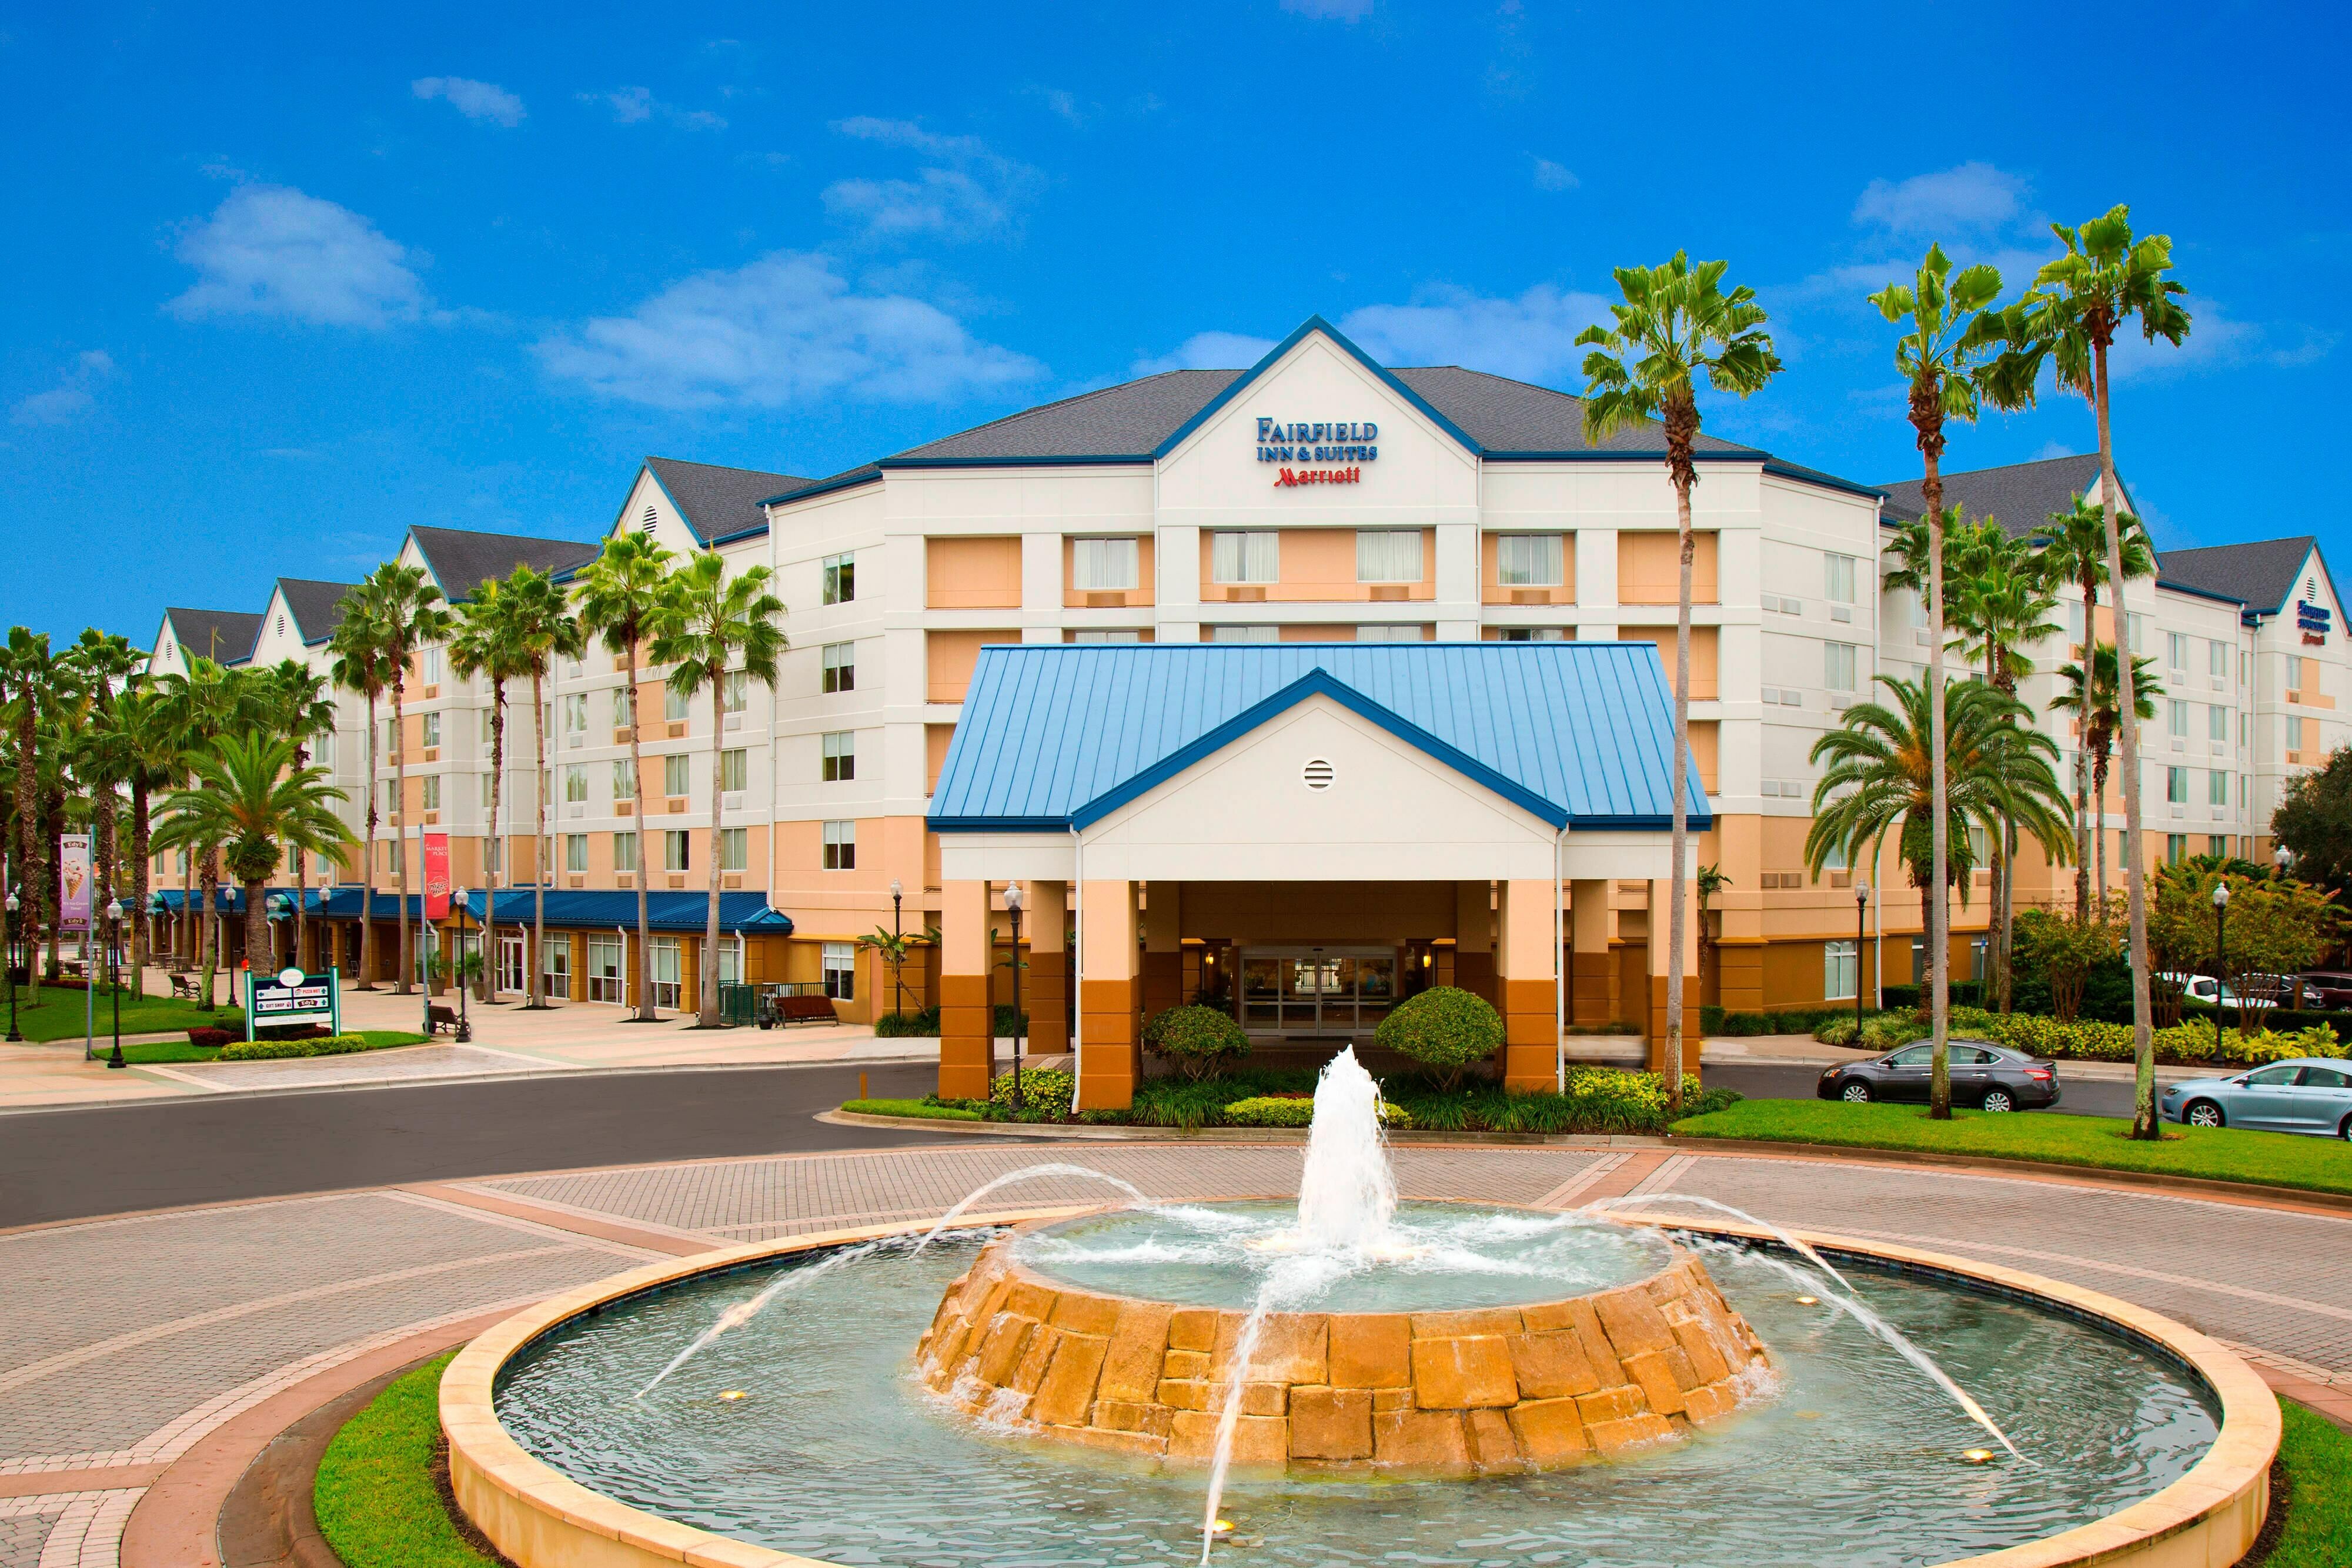 Photo of Fairfield Inn & Suites Orlando Lake Buena Vista in the Marriott Village, Orlando, FL